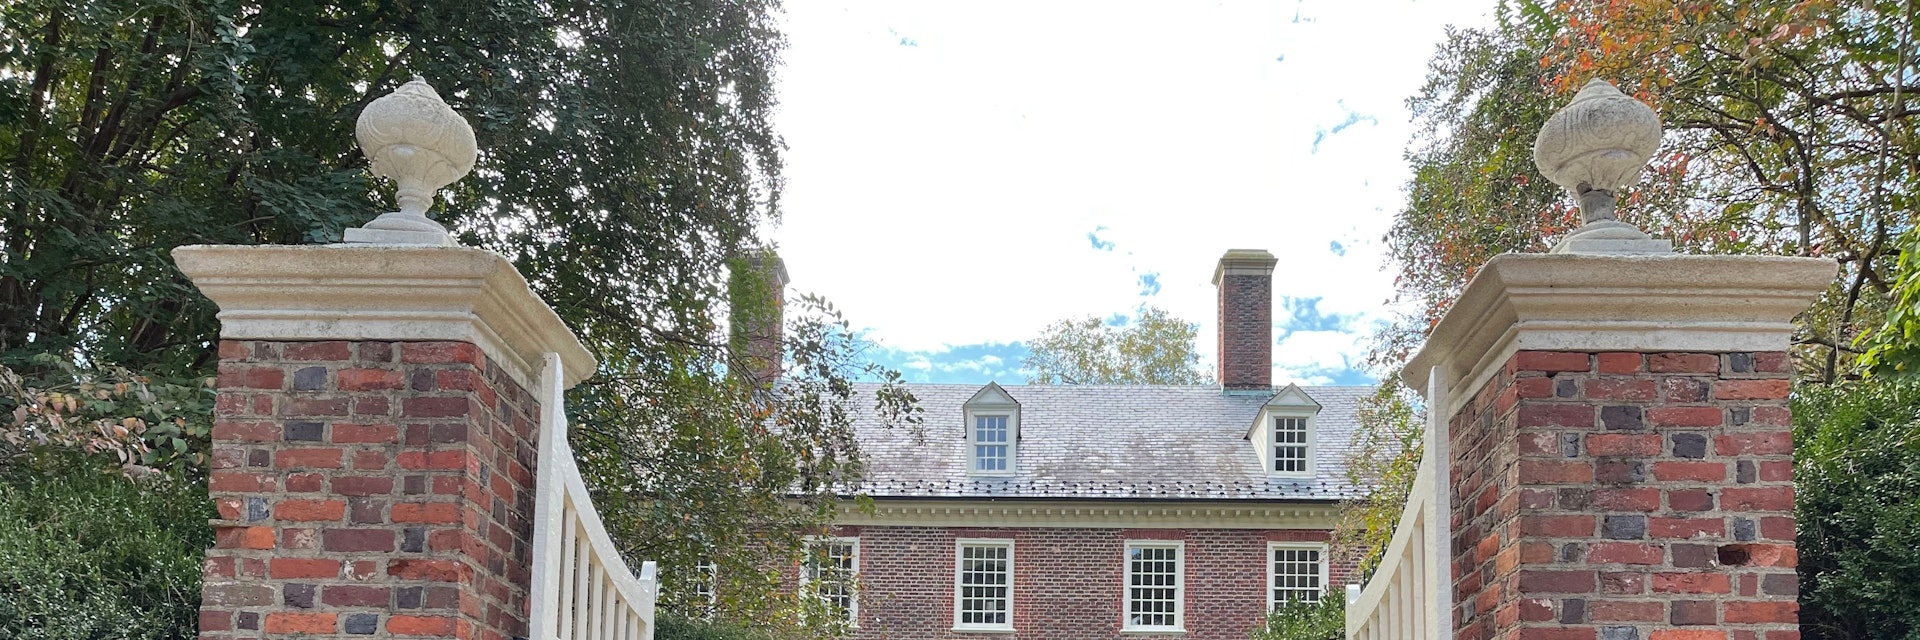 The historic Berkeley Plantation in Virginia. 